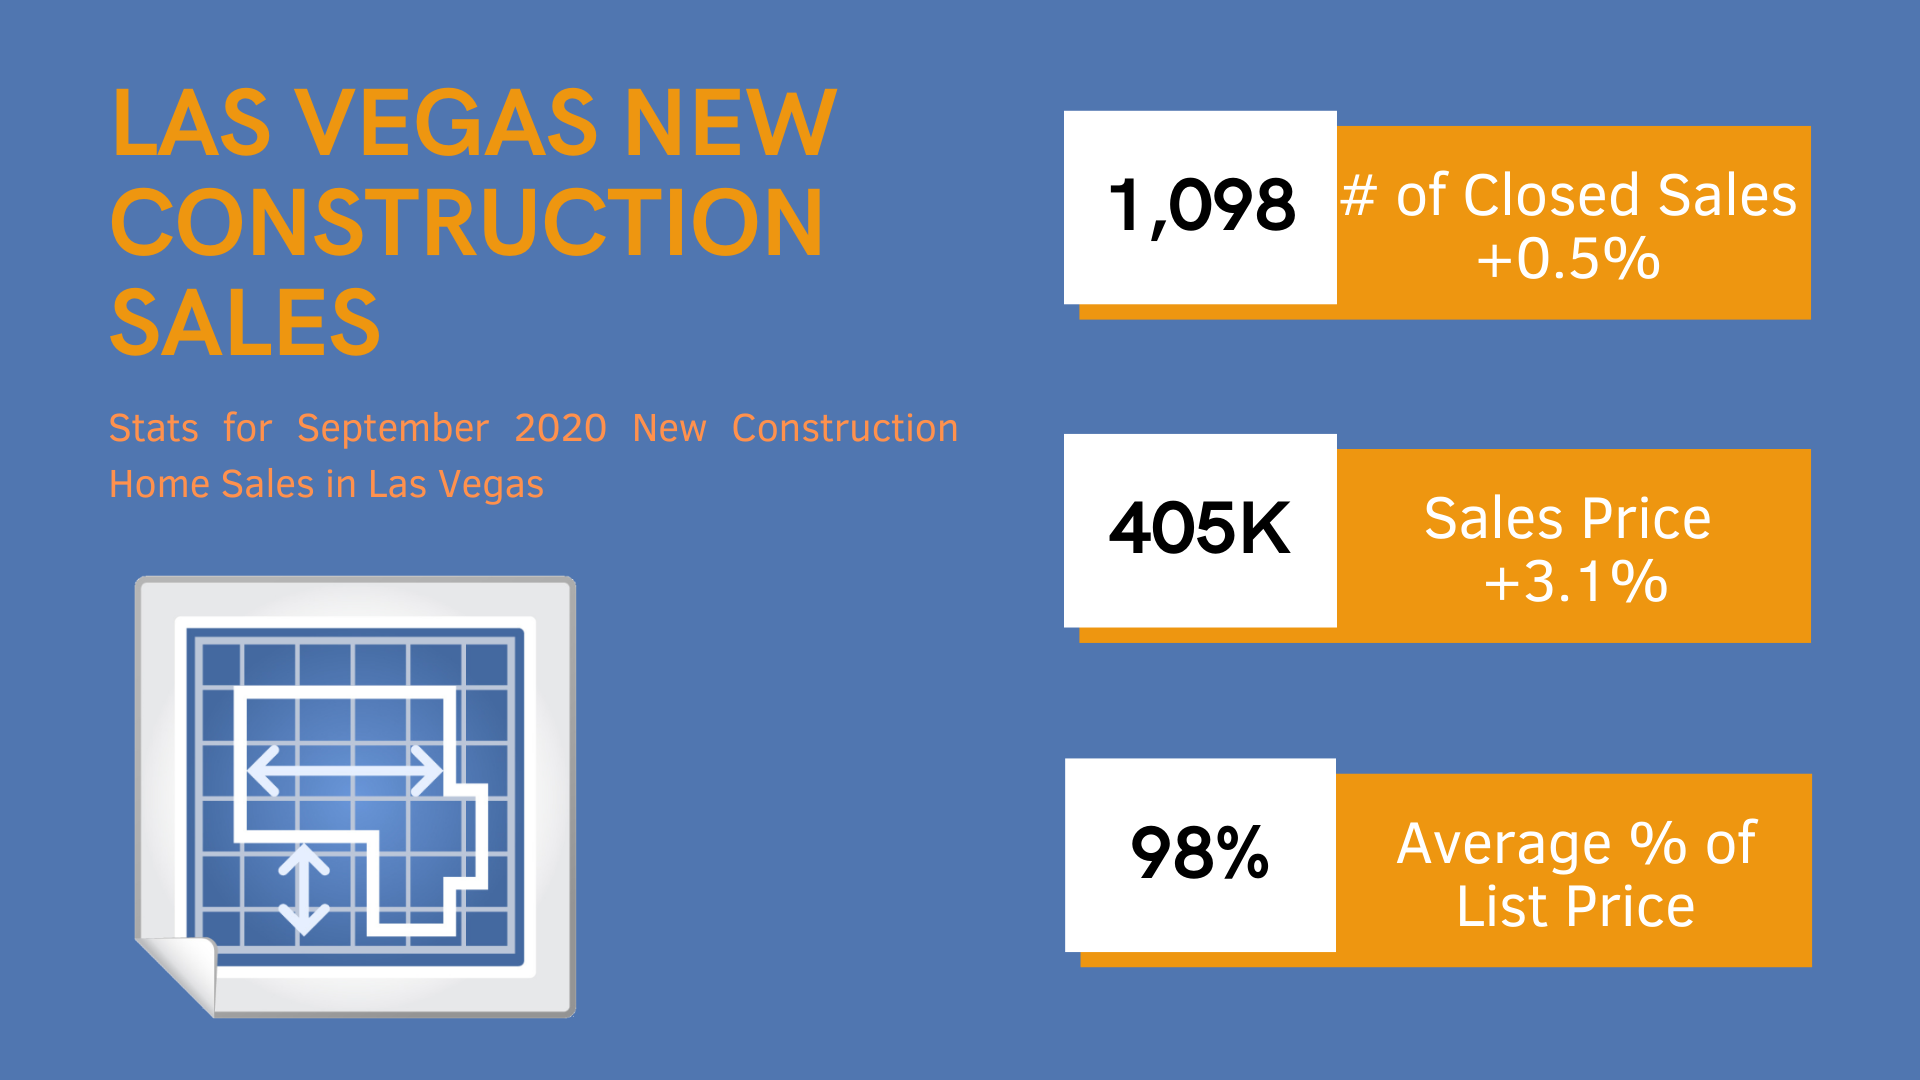 Las Vegas new construction sales for September 2020